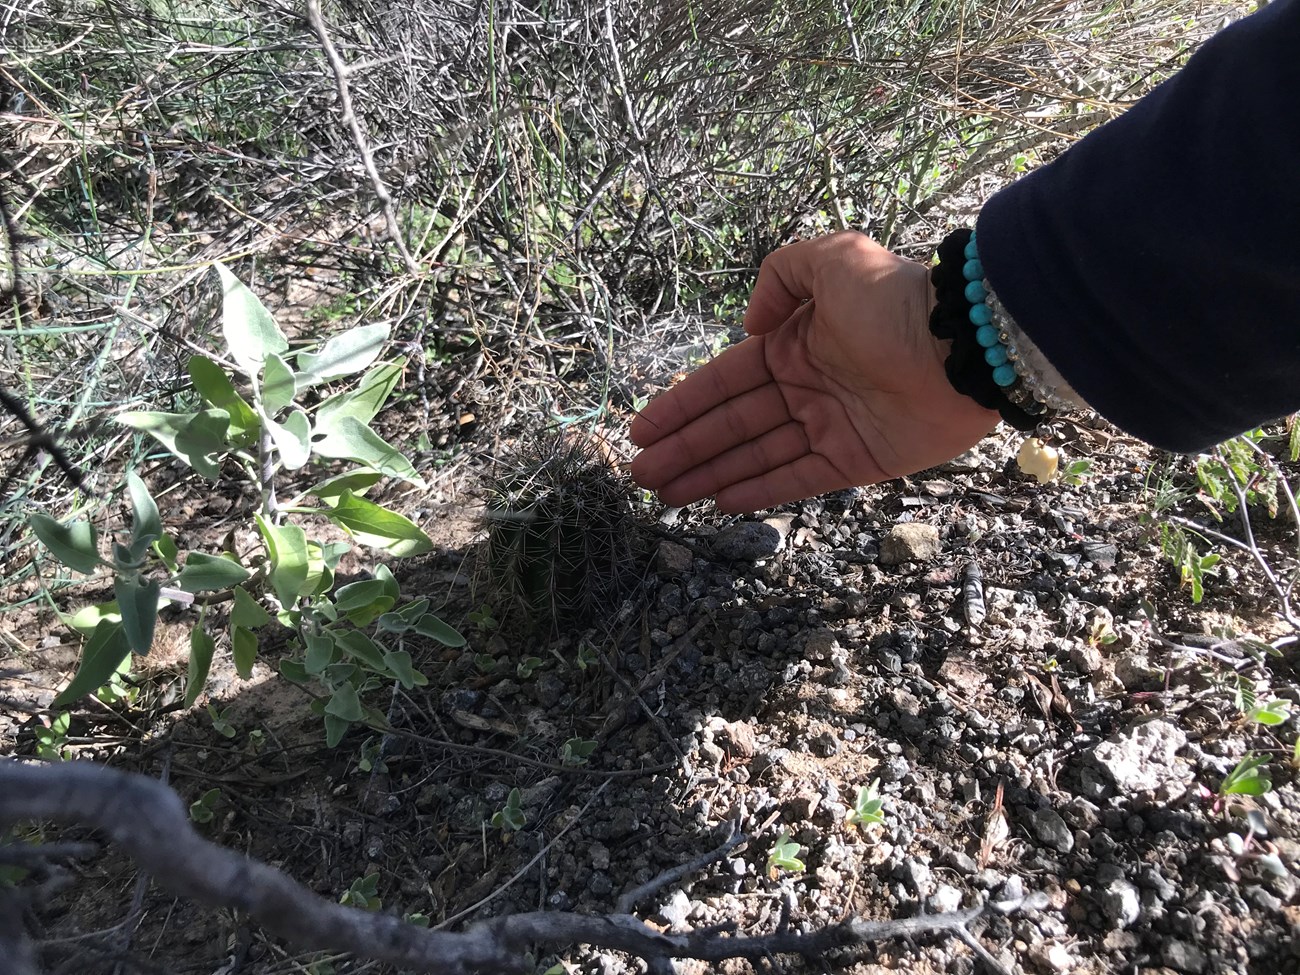 Tiny saguaro found on plot